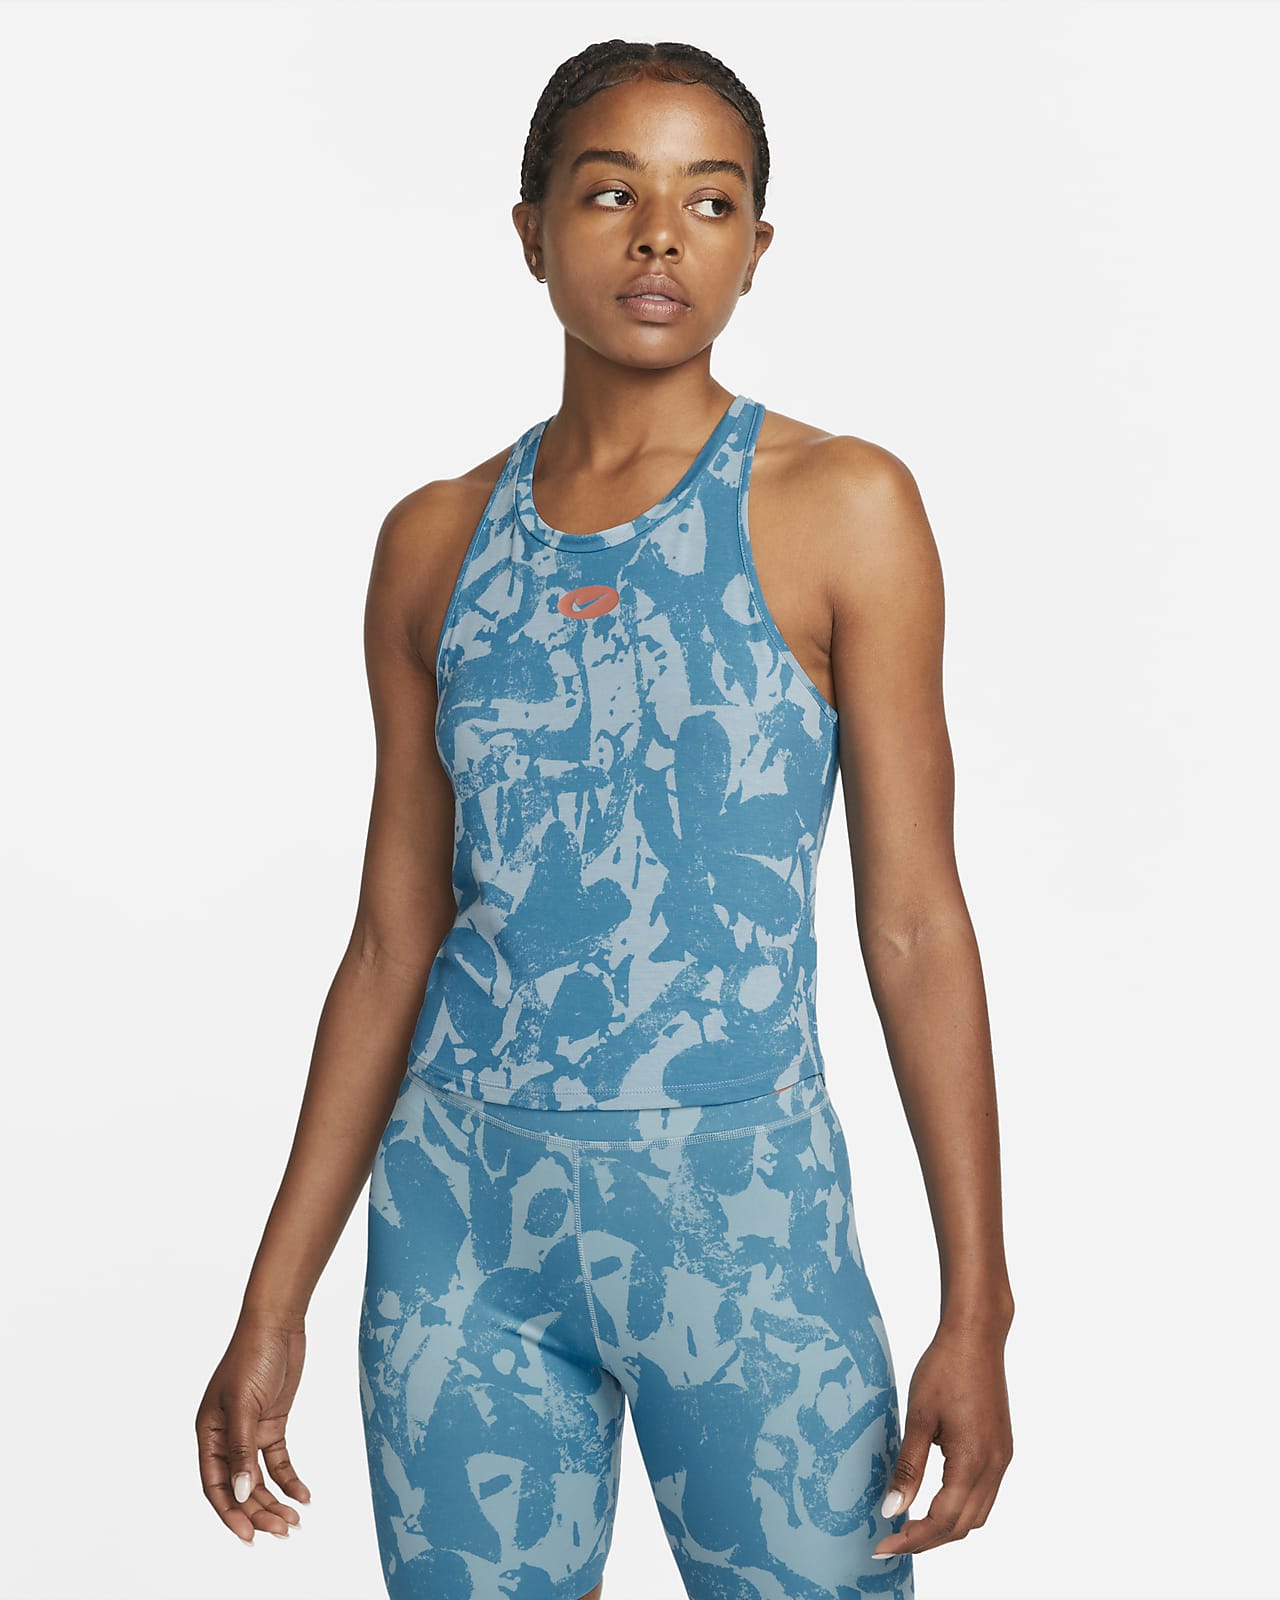 Nike Women's Dri-FIT One Printed Training Tank Top (Plus Size) in